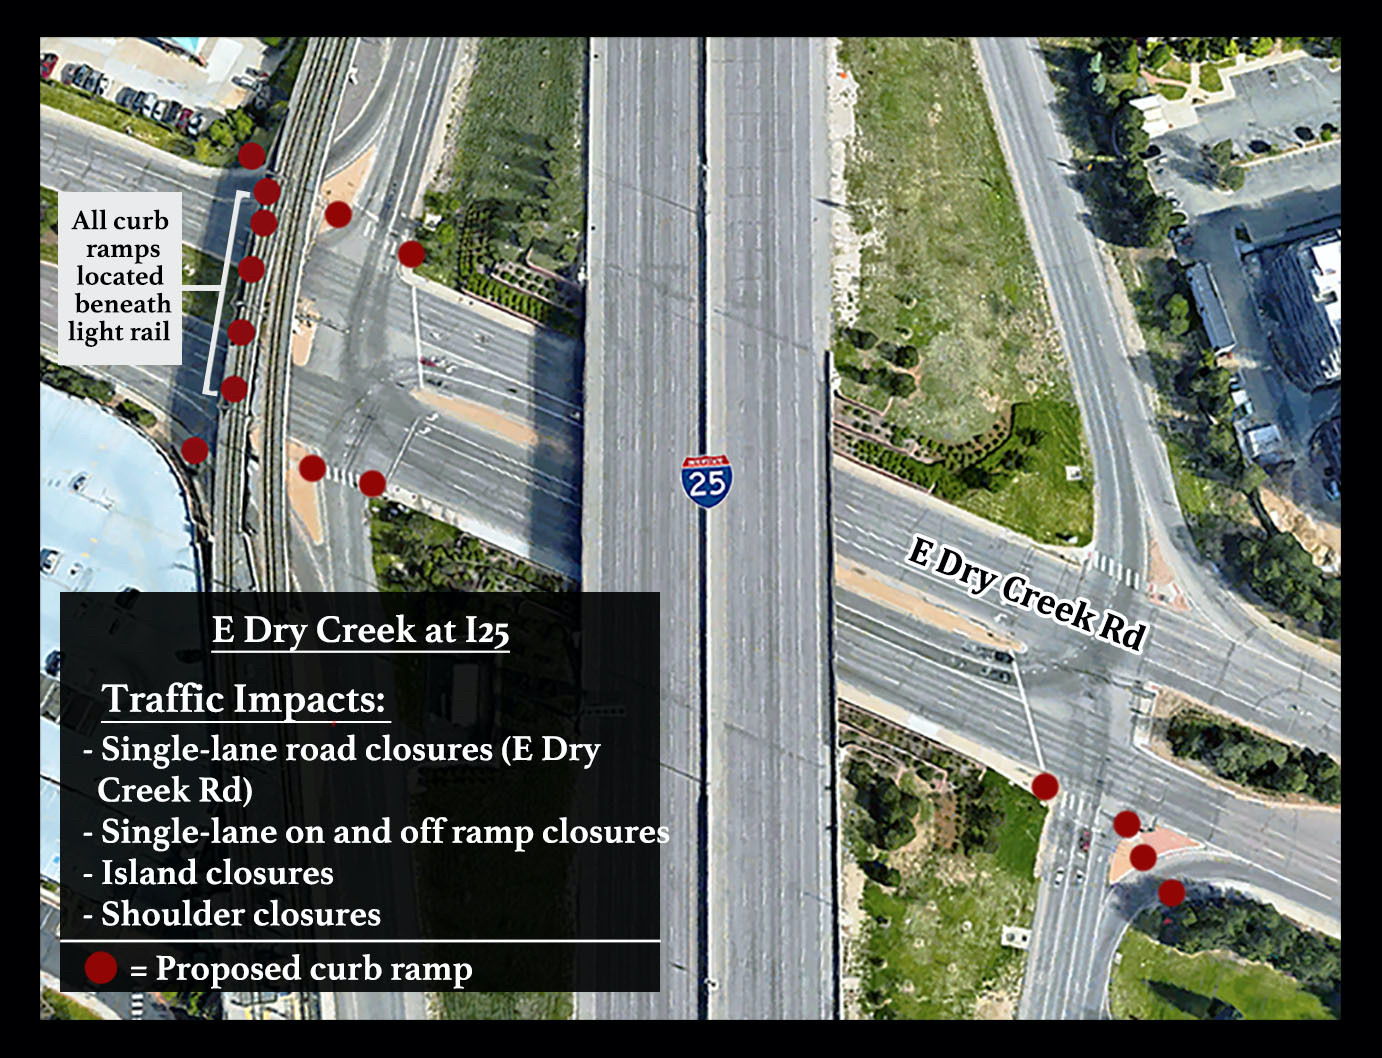 E Dry Creek Road final .jpg detail image